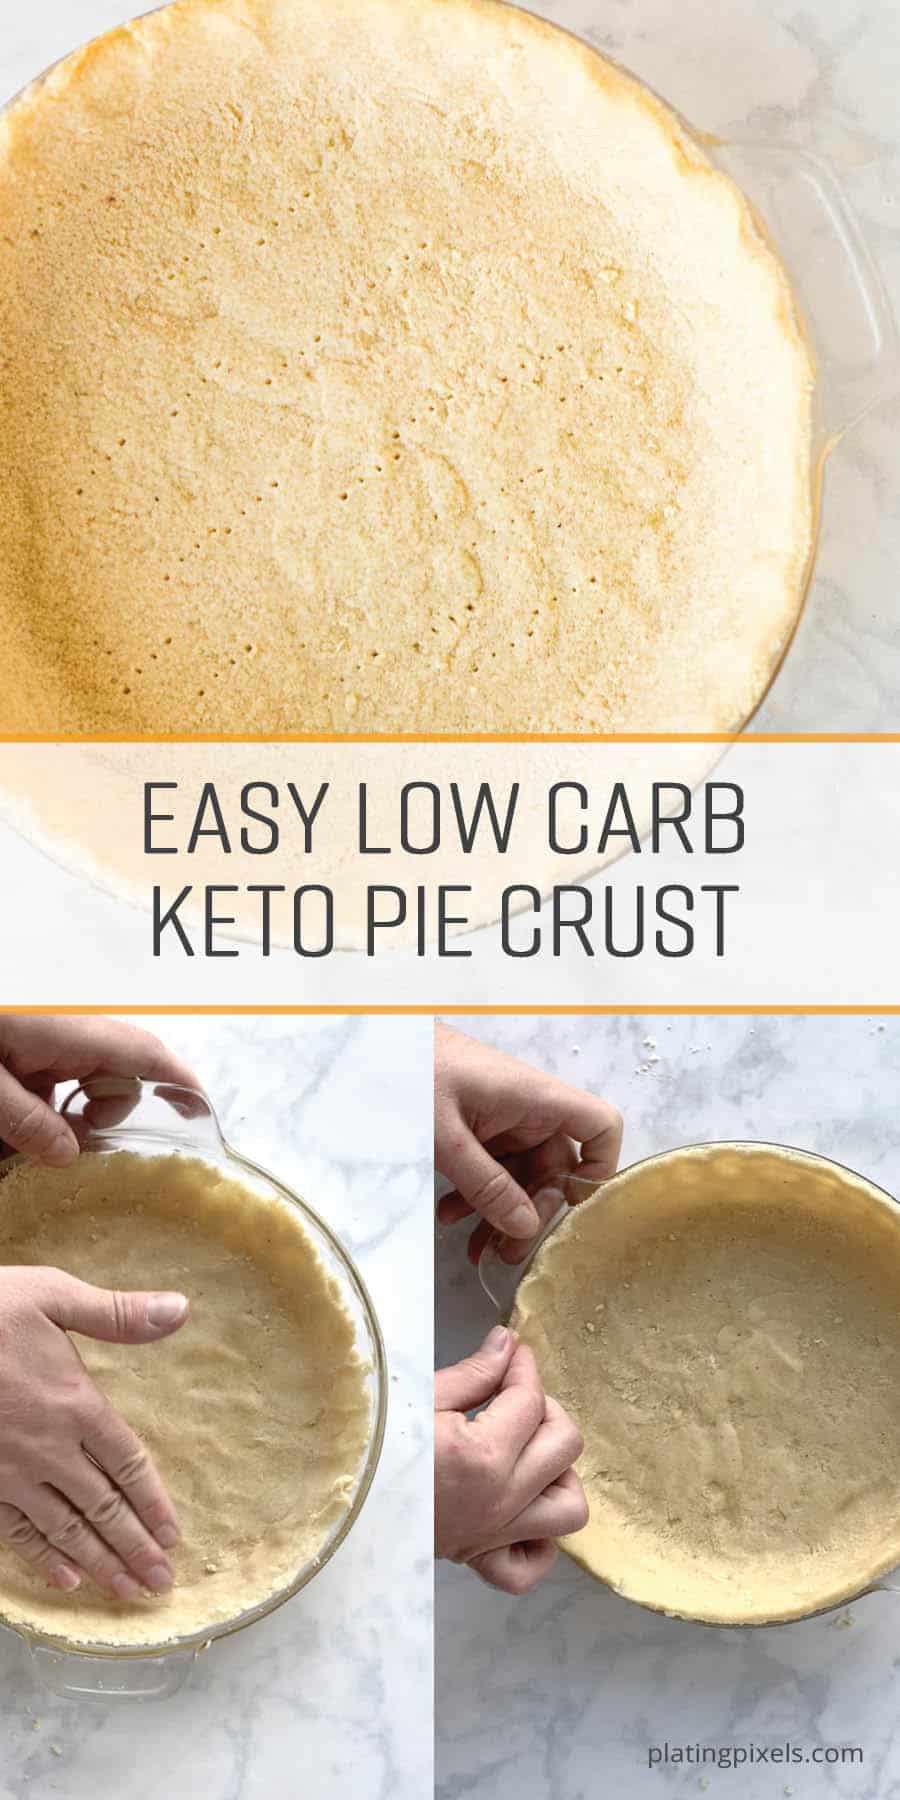 Easy Keto Pie Crust (Works with Any Pie)